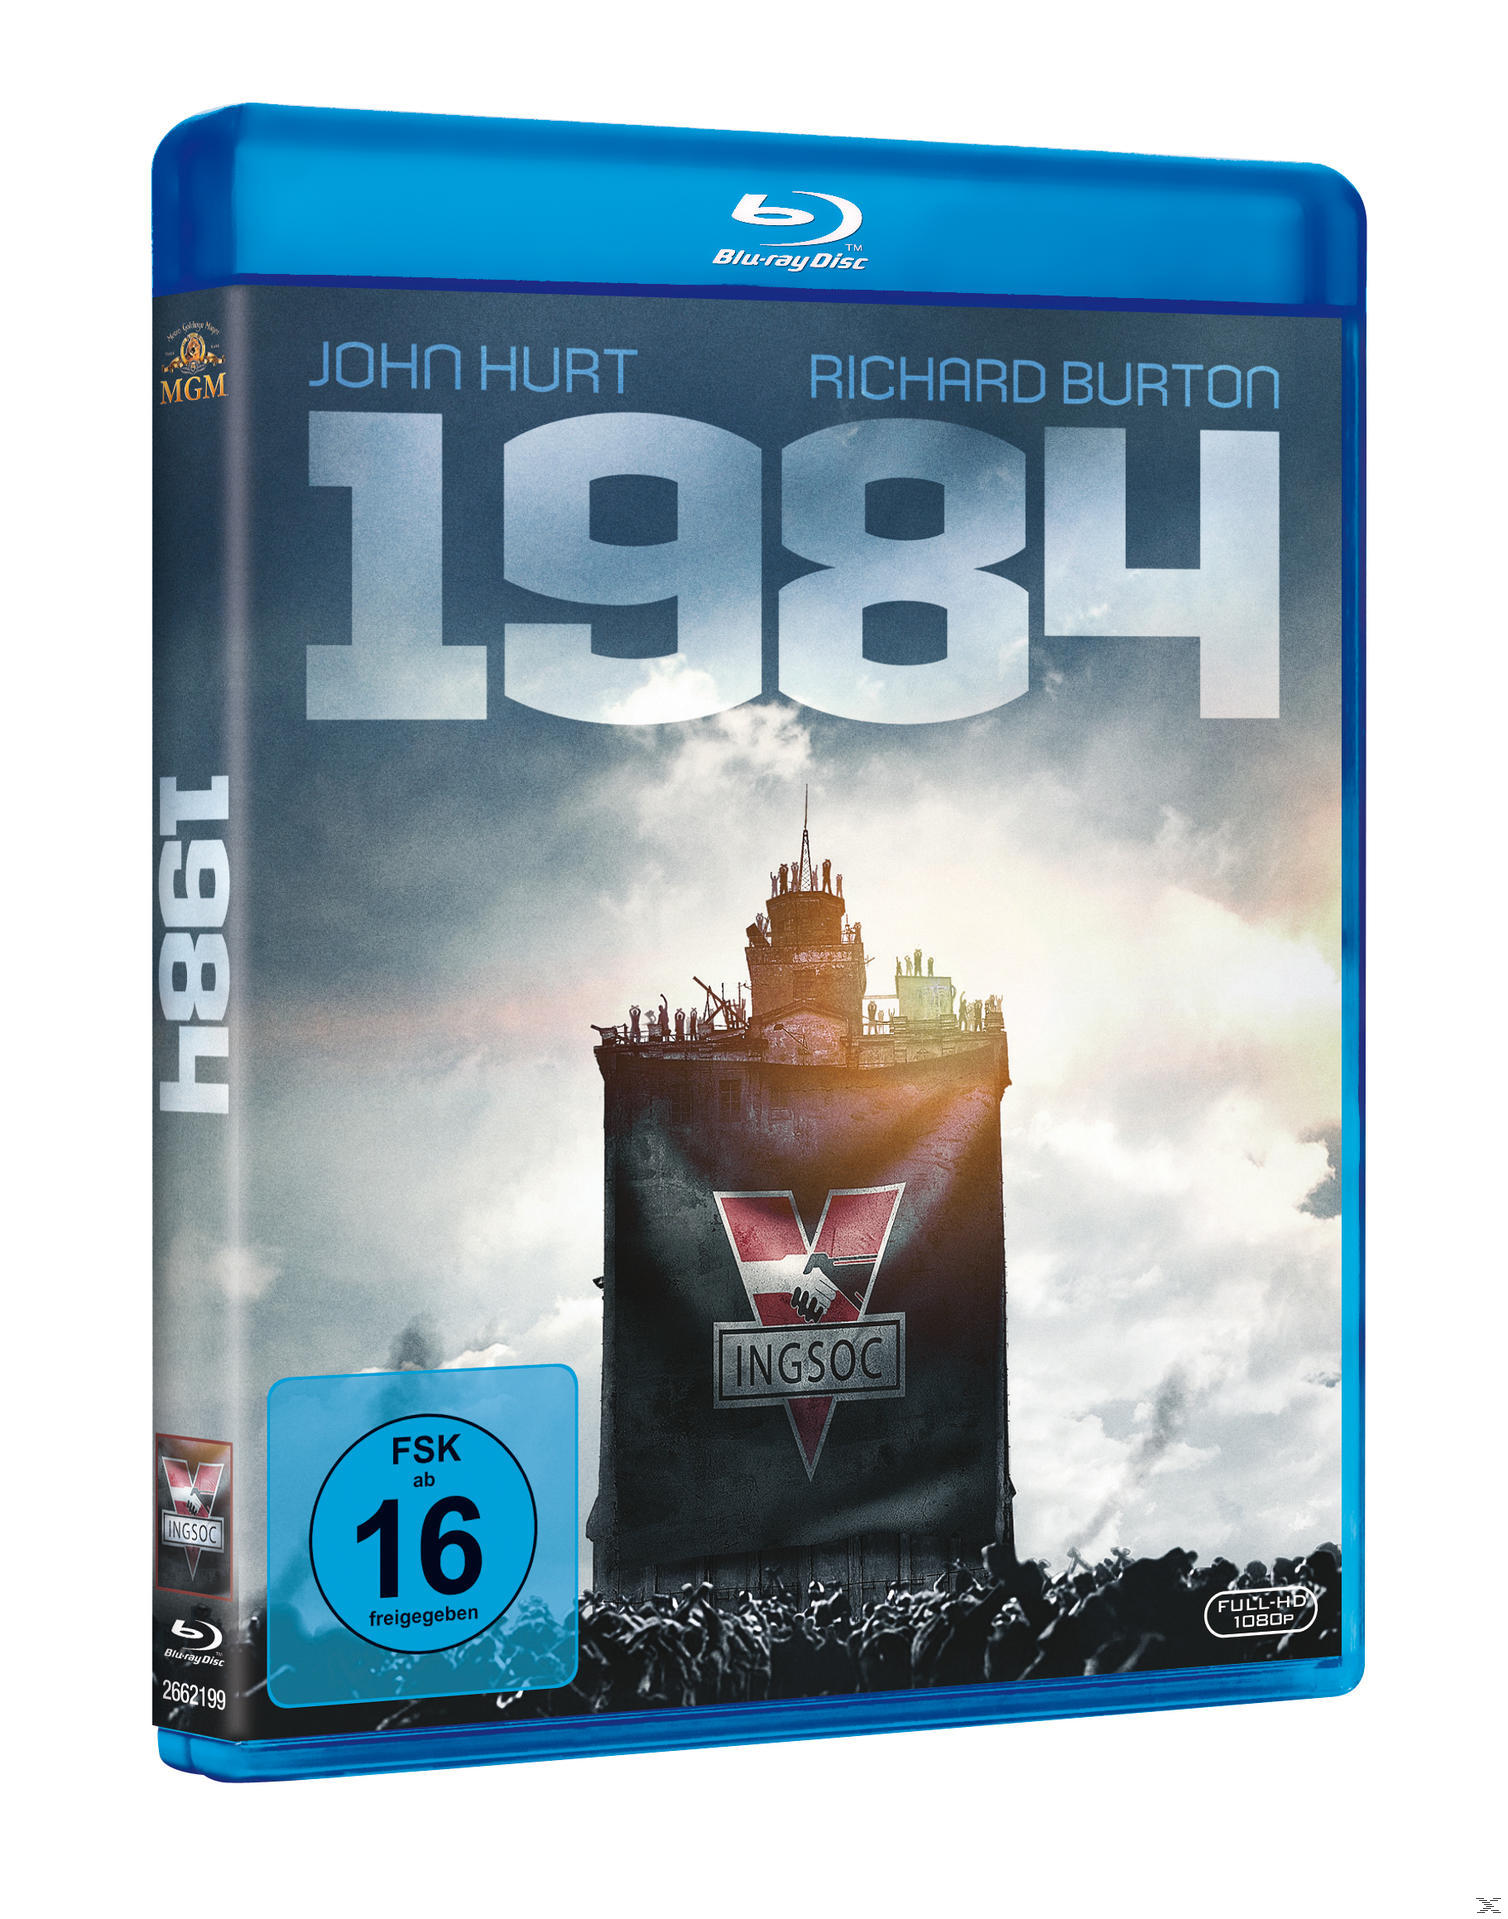 1984 Blu-ray